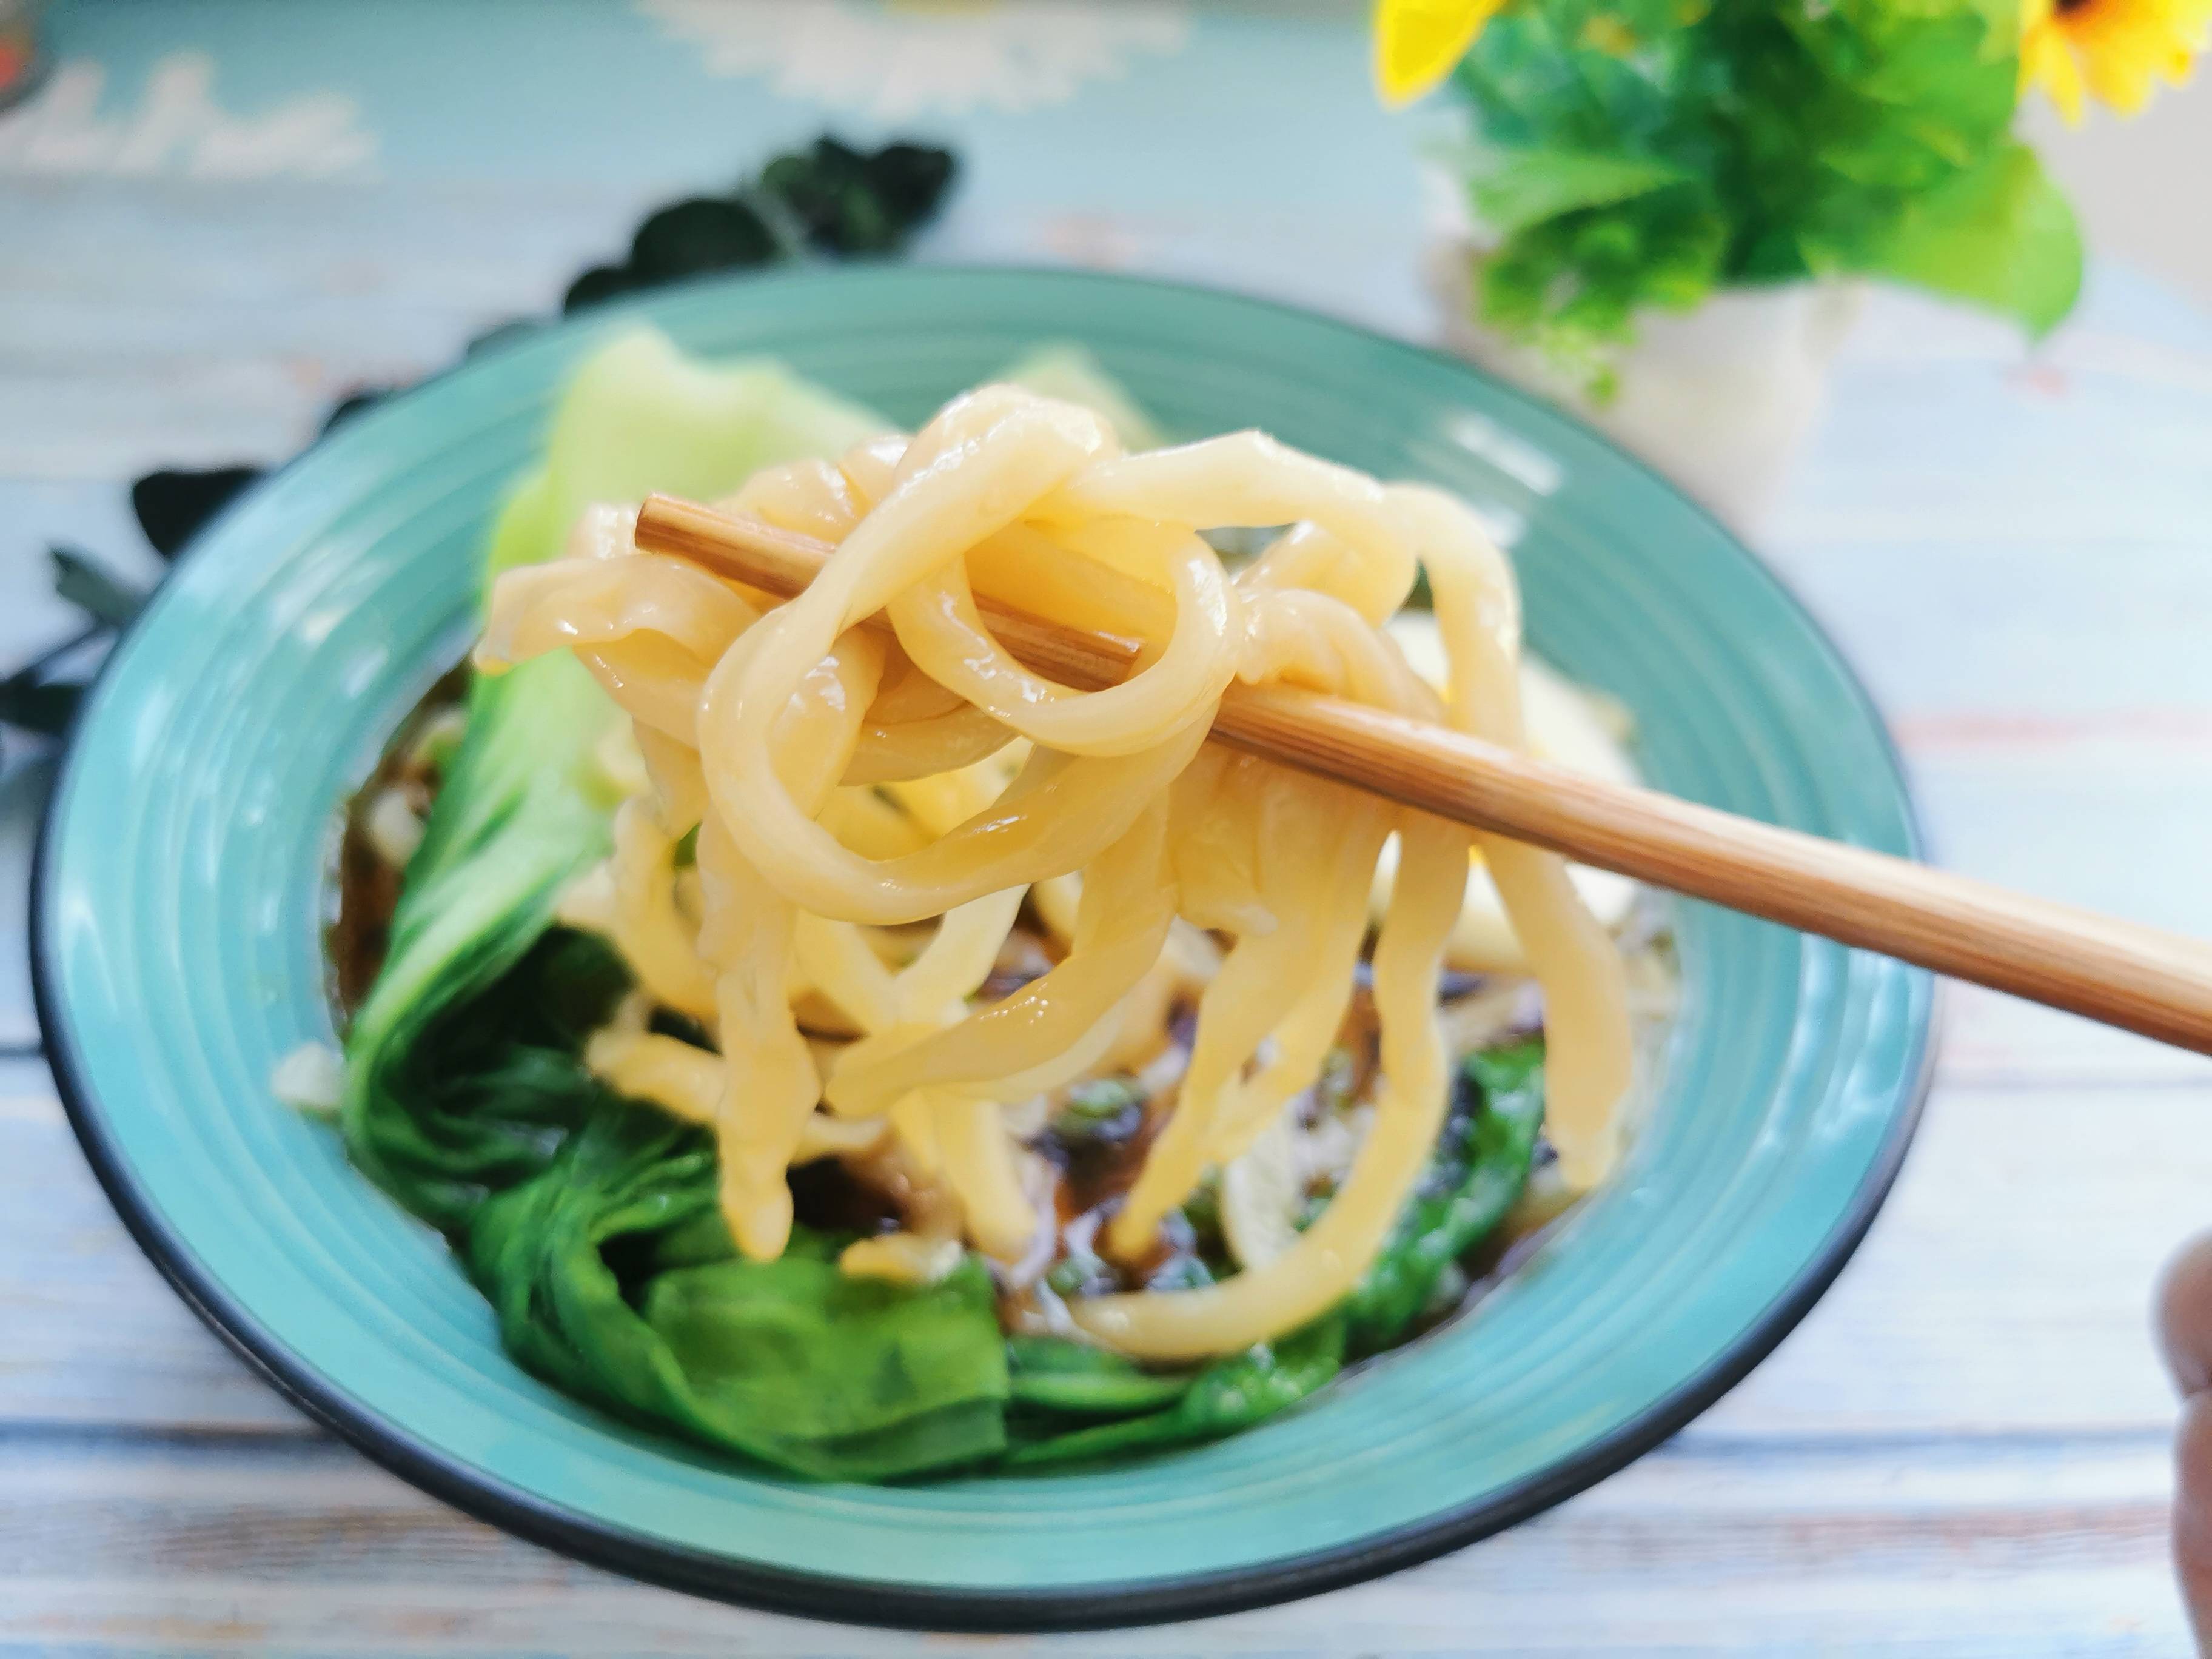 A Bowl of Yangchun Noodles recipe